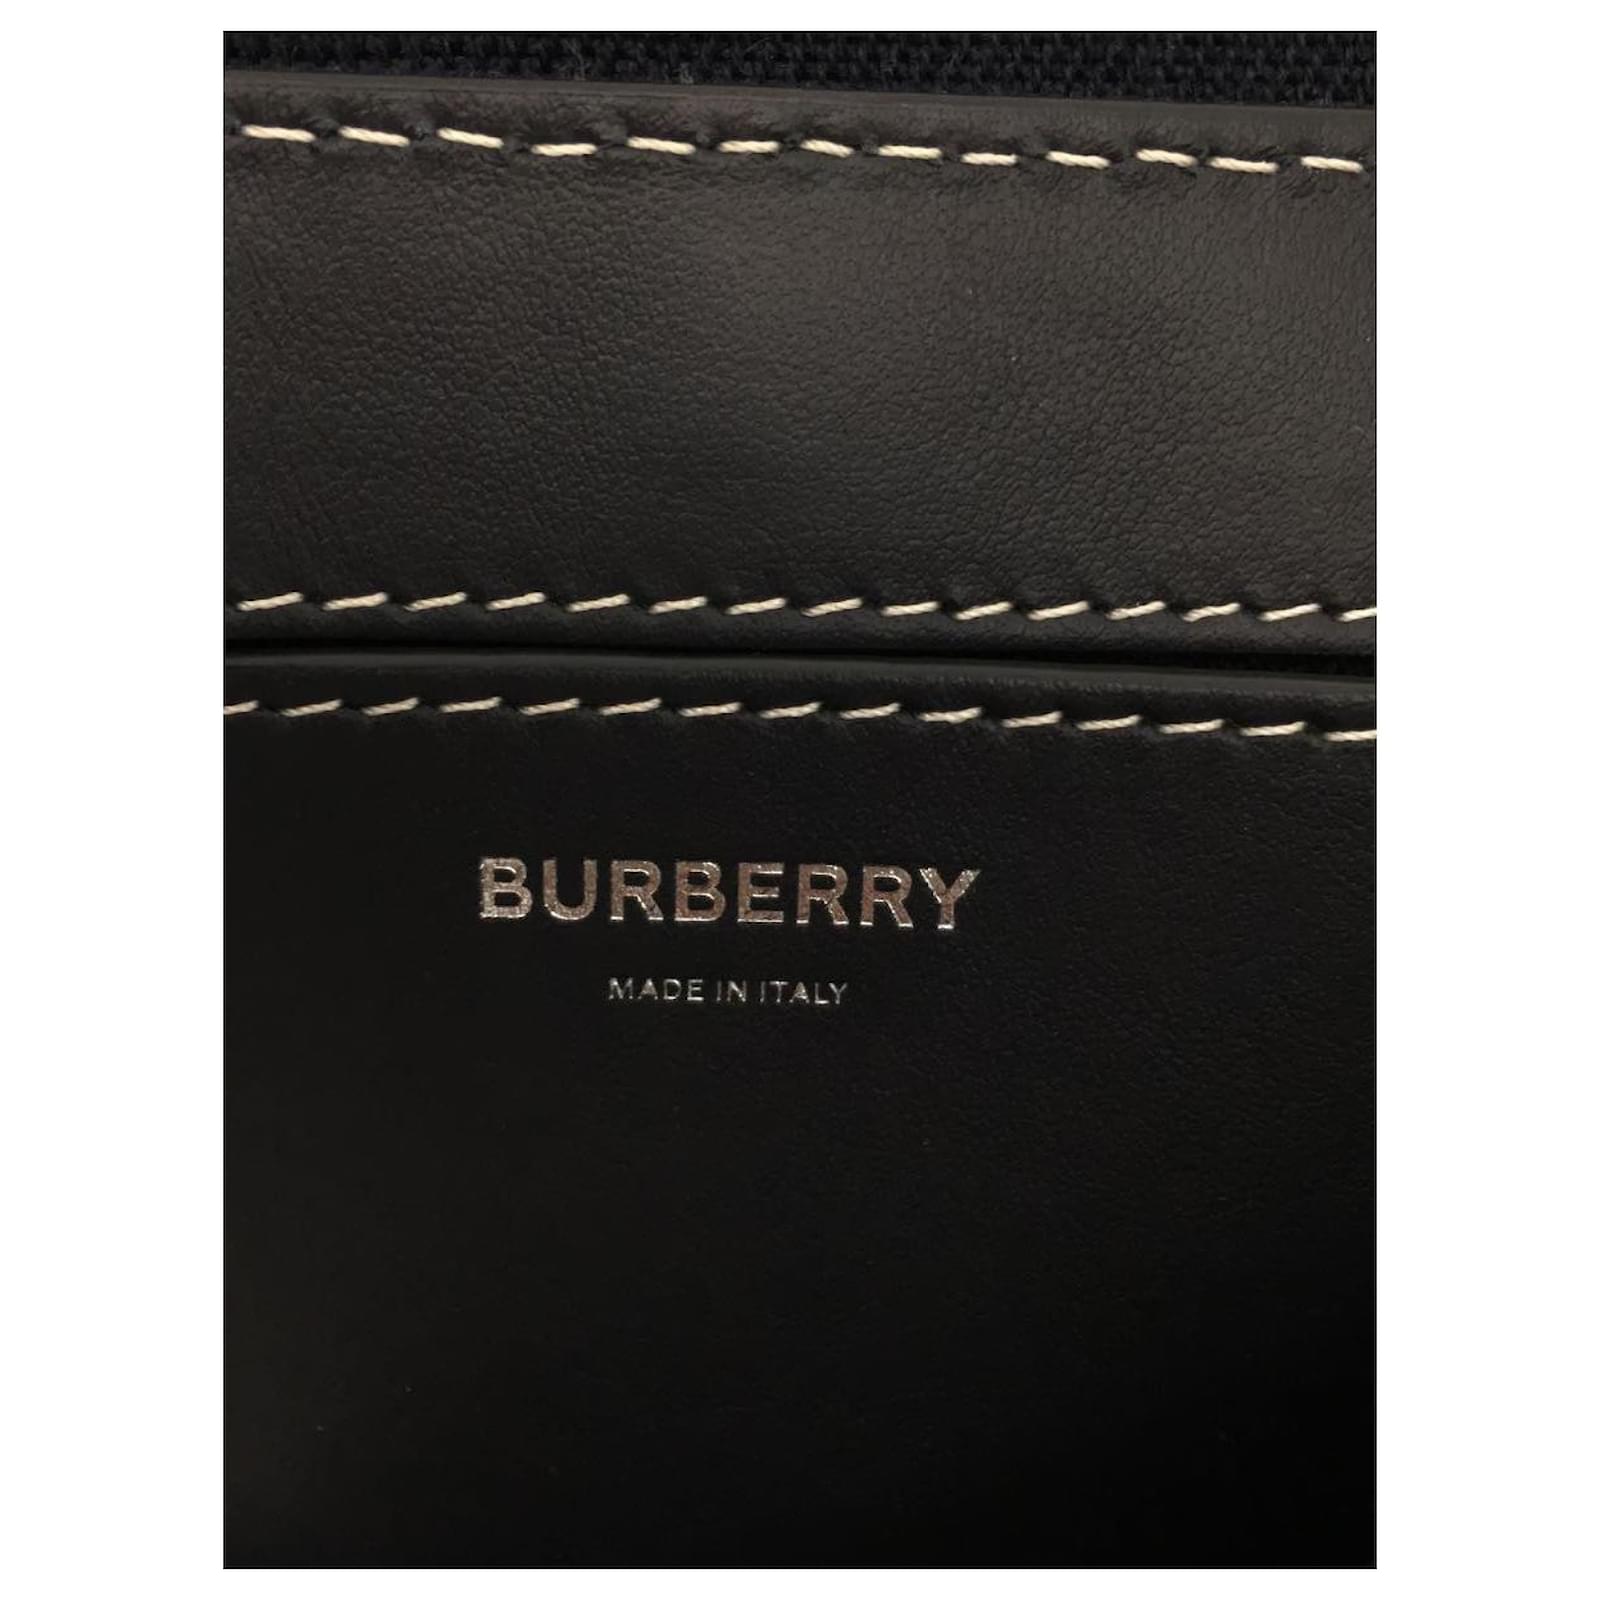 BURBERRY LONDON ◇ NOTE / Note / Shoulder bag / Canvas / NVY 